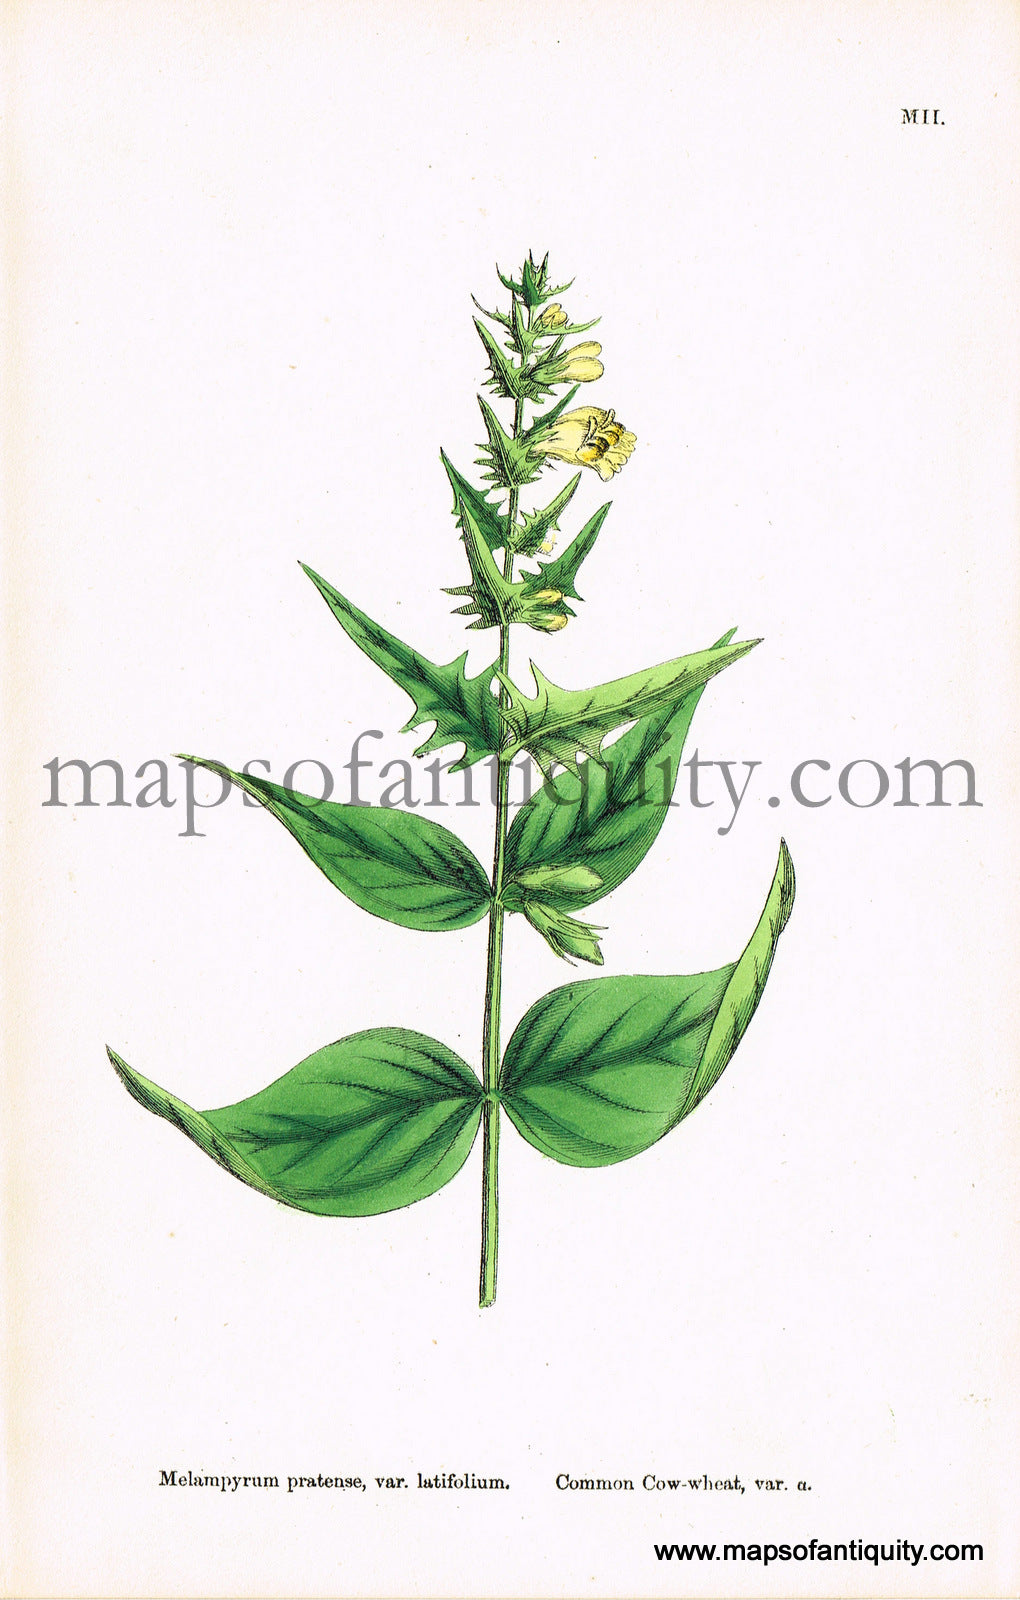 Antique-Hand-Colored-Print-Melampyrum-pratense-var.-latifolium-Antique-Prints-Natural-History-Botanical-c.-1860-Sowerby-Maps-Of-Antiquity